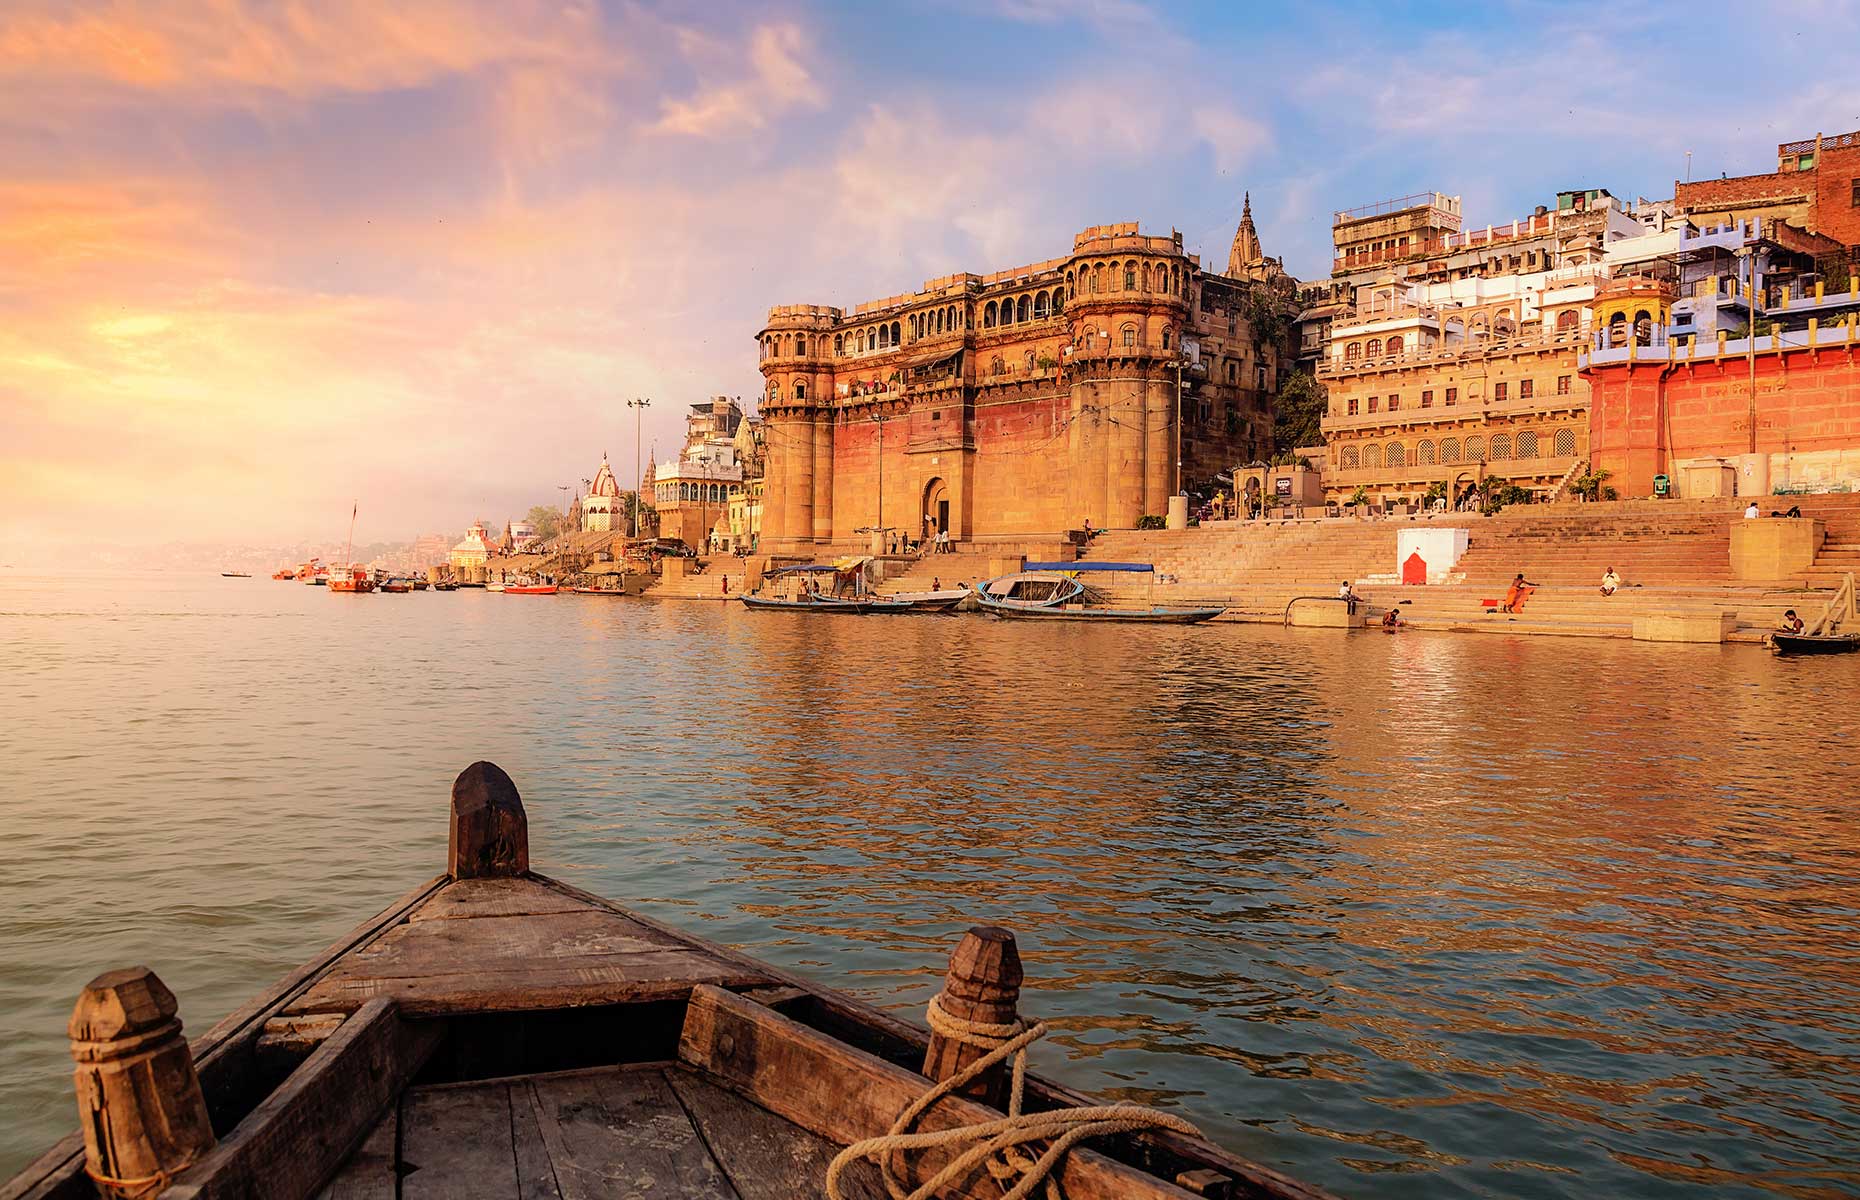 Varanasi, on the Ganges (Image: Roop_Dey/Shutterstock)